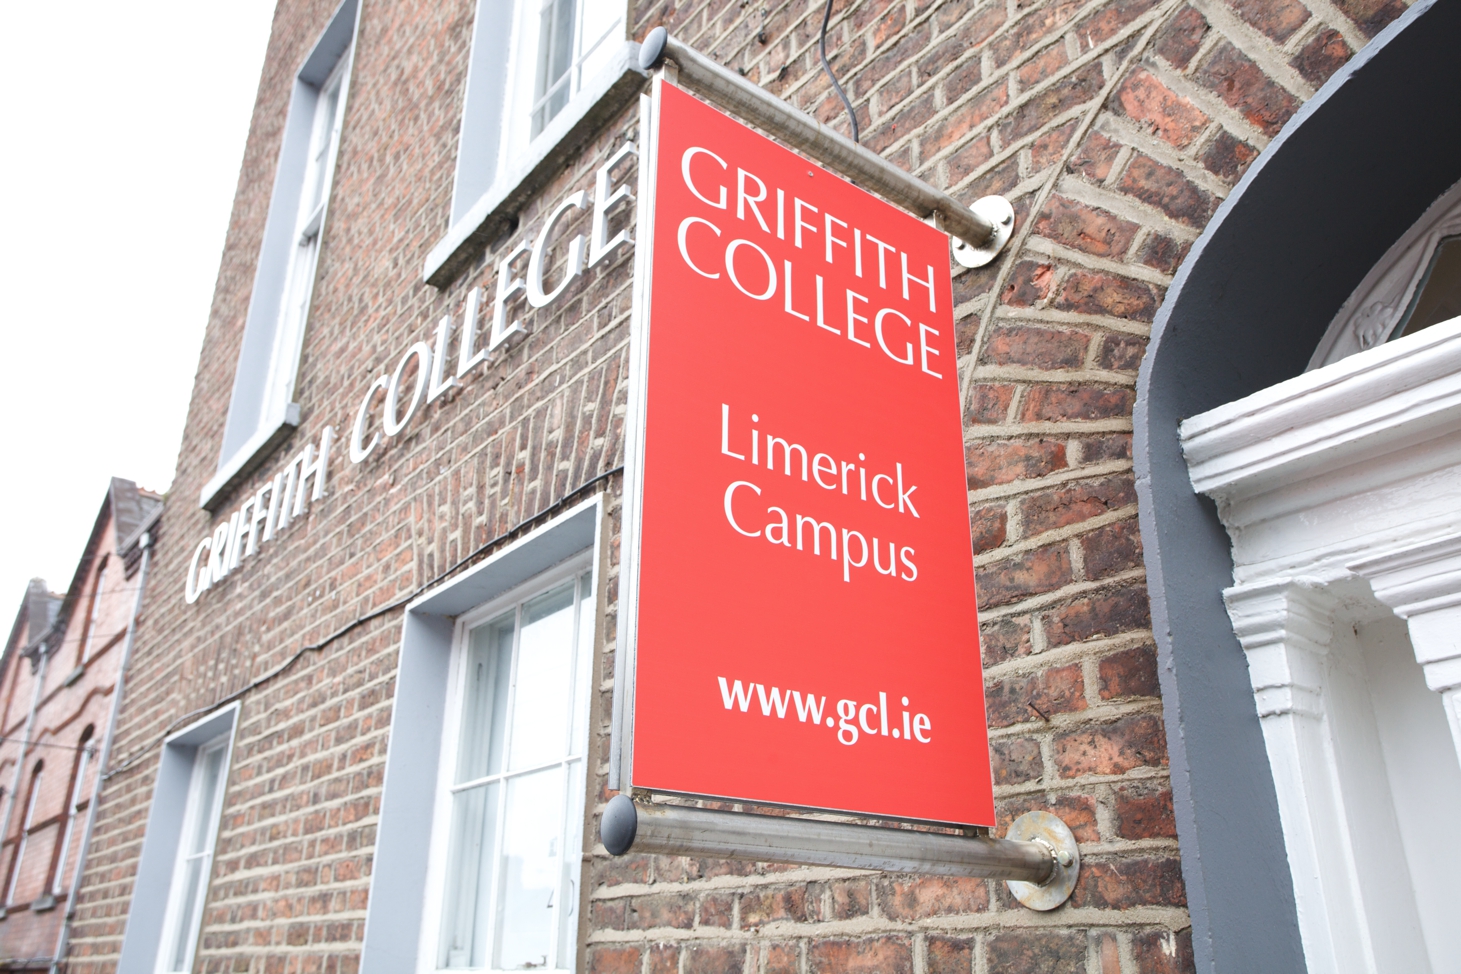 Course Image Limerick Campus